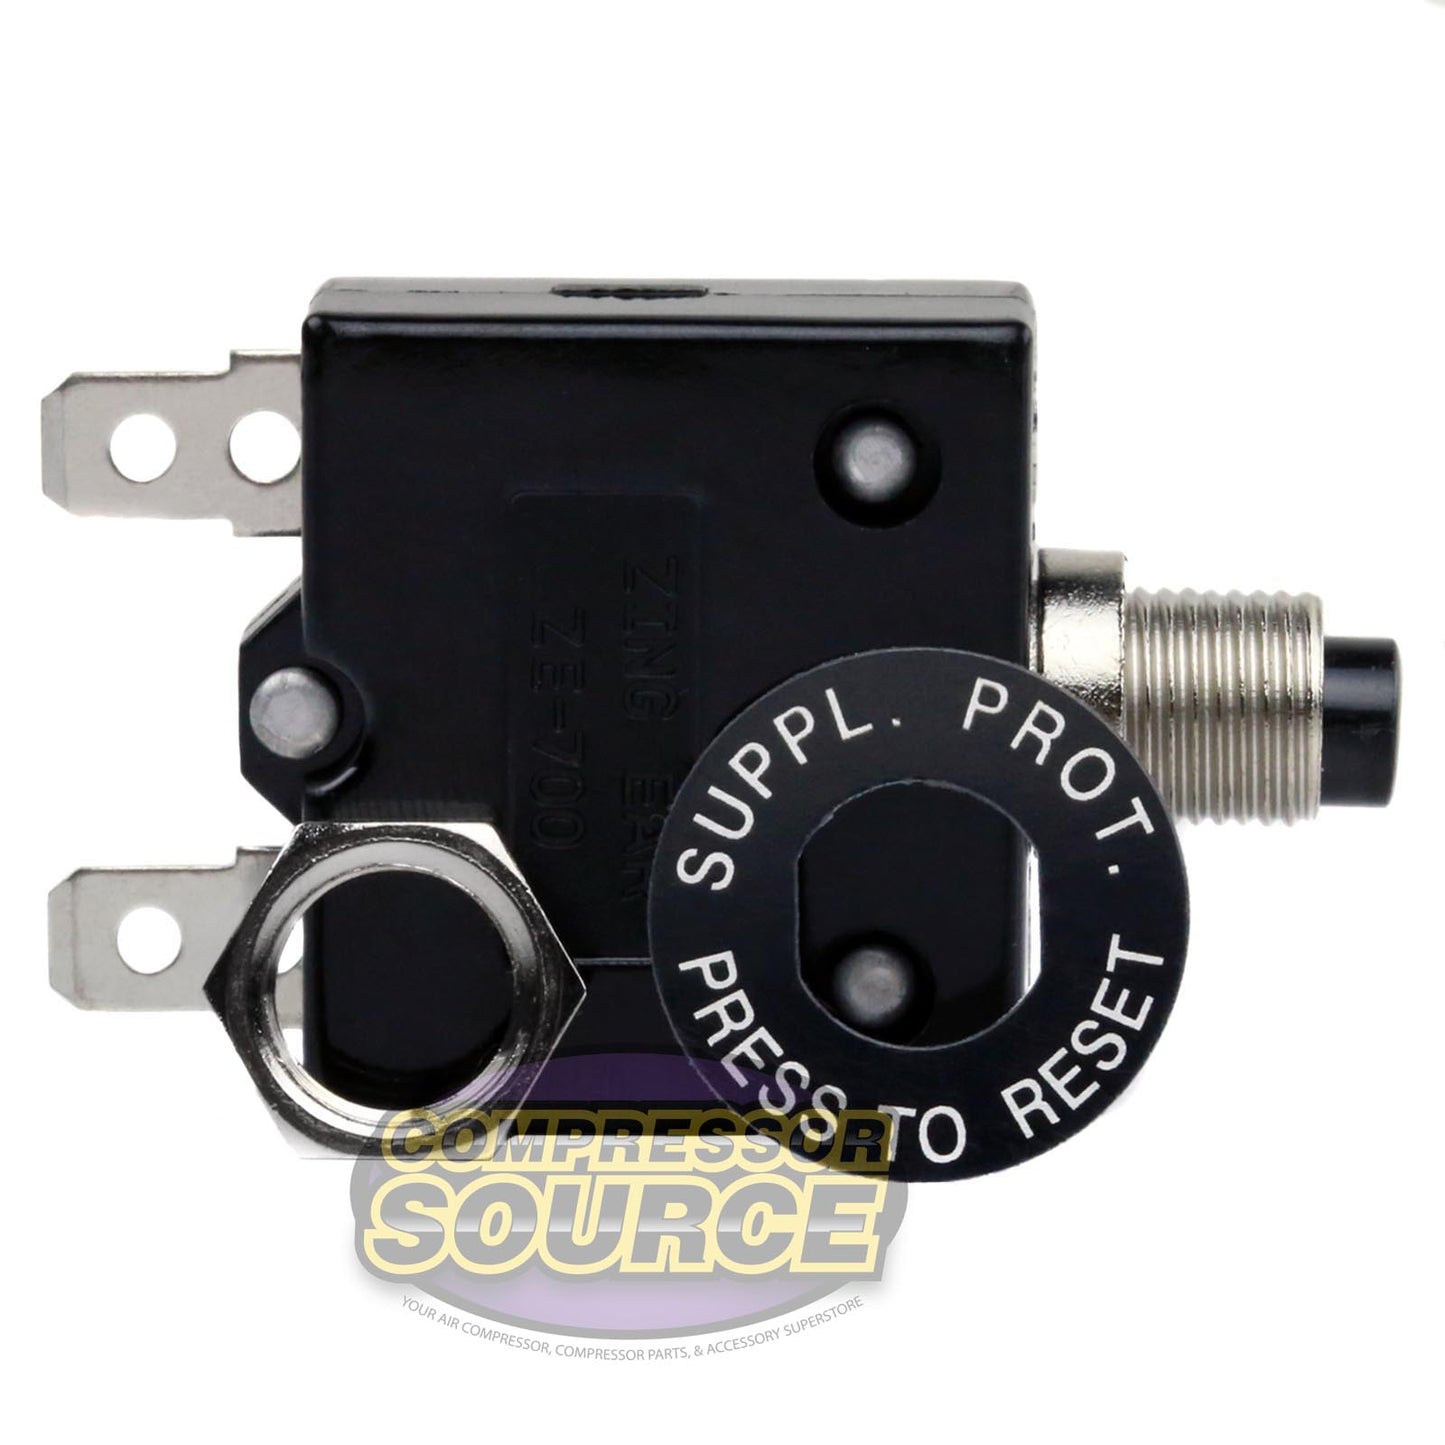 Puma 18 Amp Circuit Breaker Push Button 12 / 24 / 50 Volts DC 110 220 AC New Switch